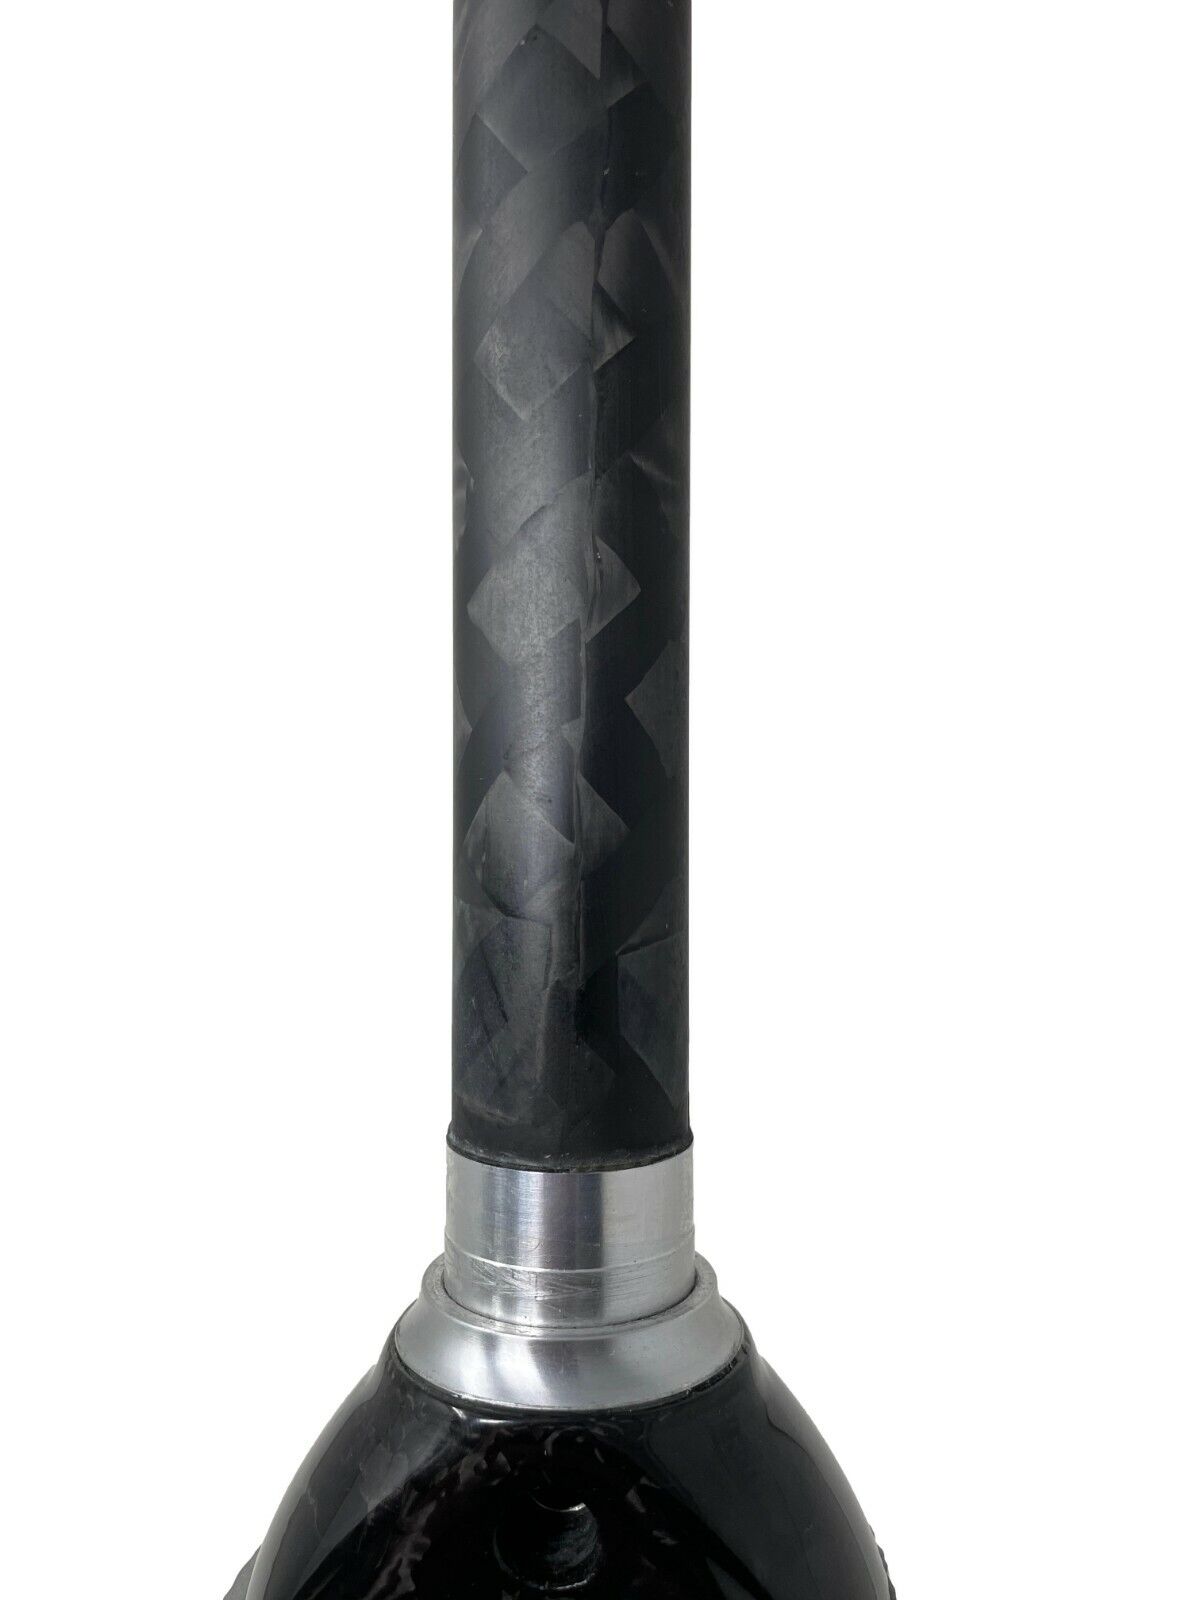 Pinarello Onda Carbon Fork - Straight Steerer - 300mm (Uncut) - 50mm Rake - Sportandleisure.com